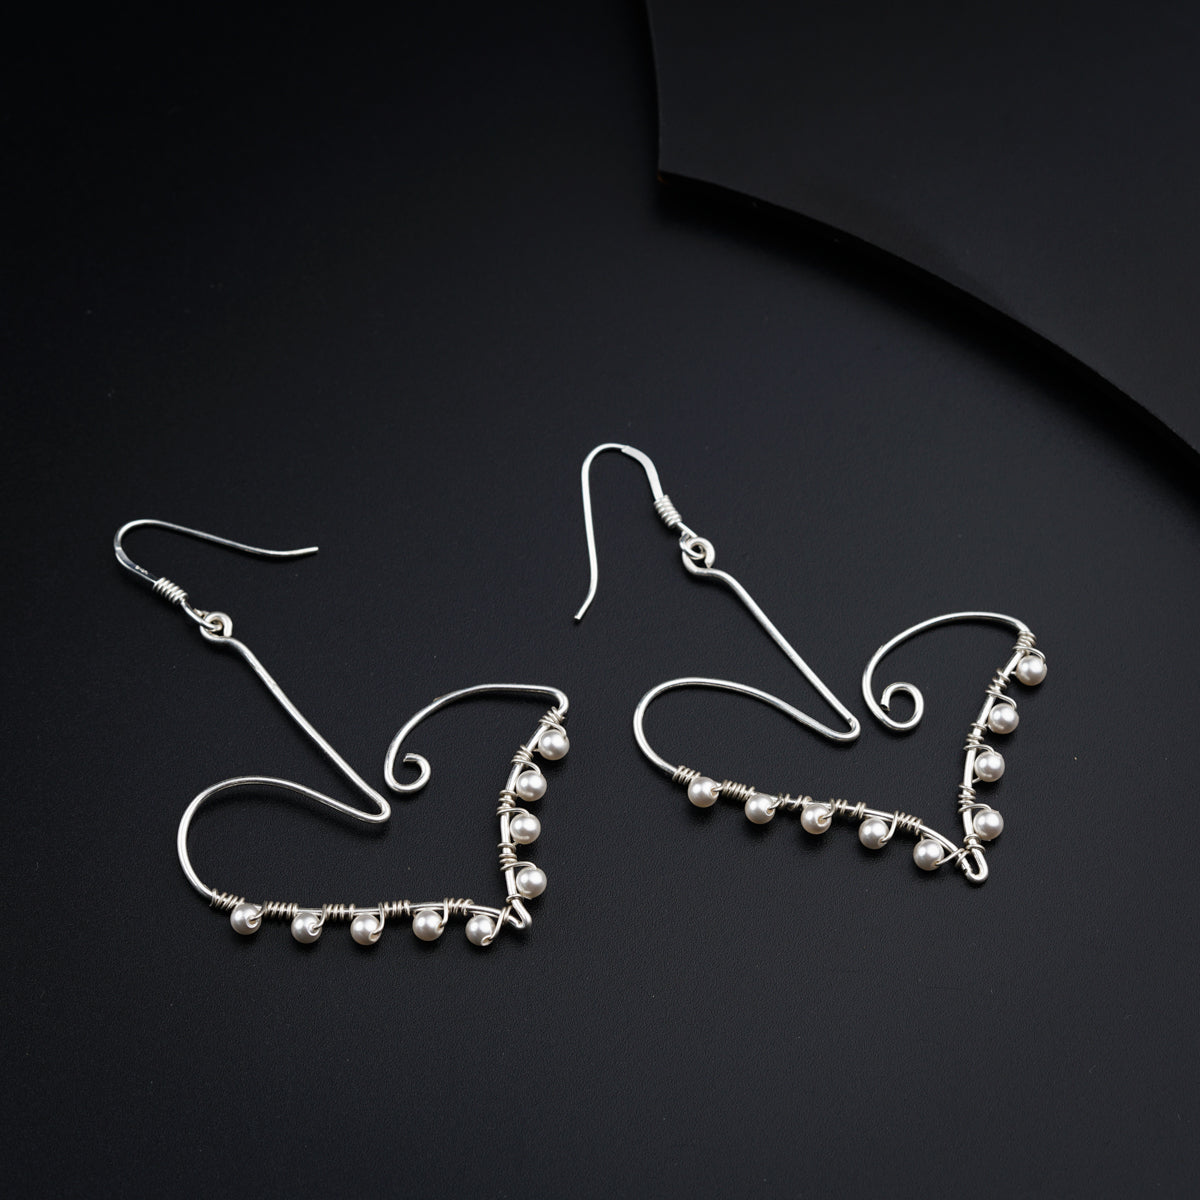 Abstract silver handmade earrings